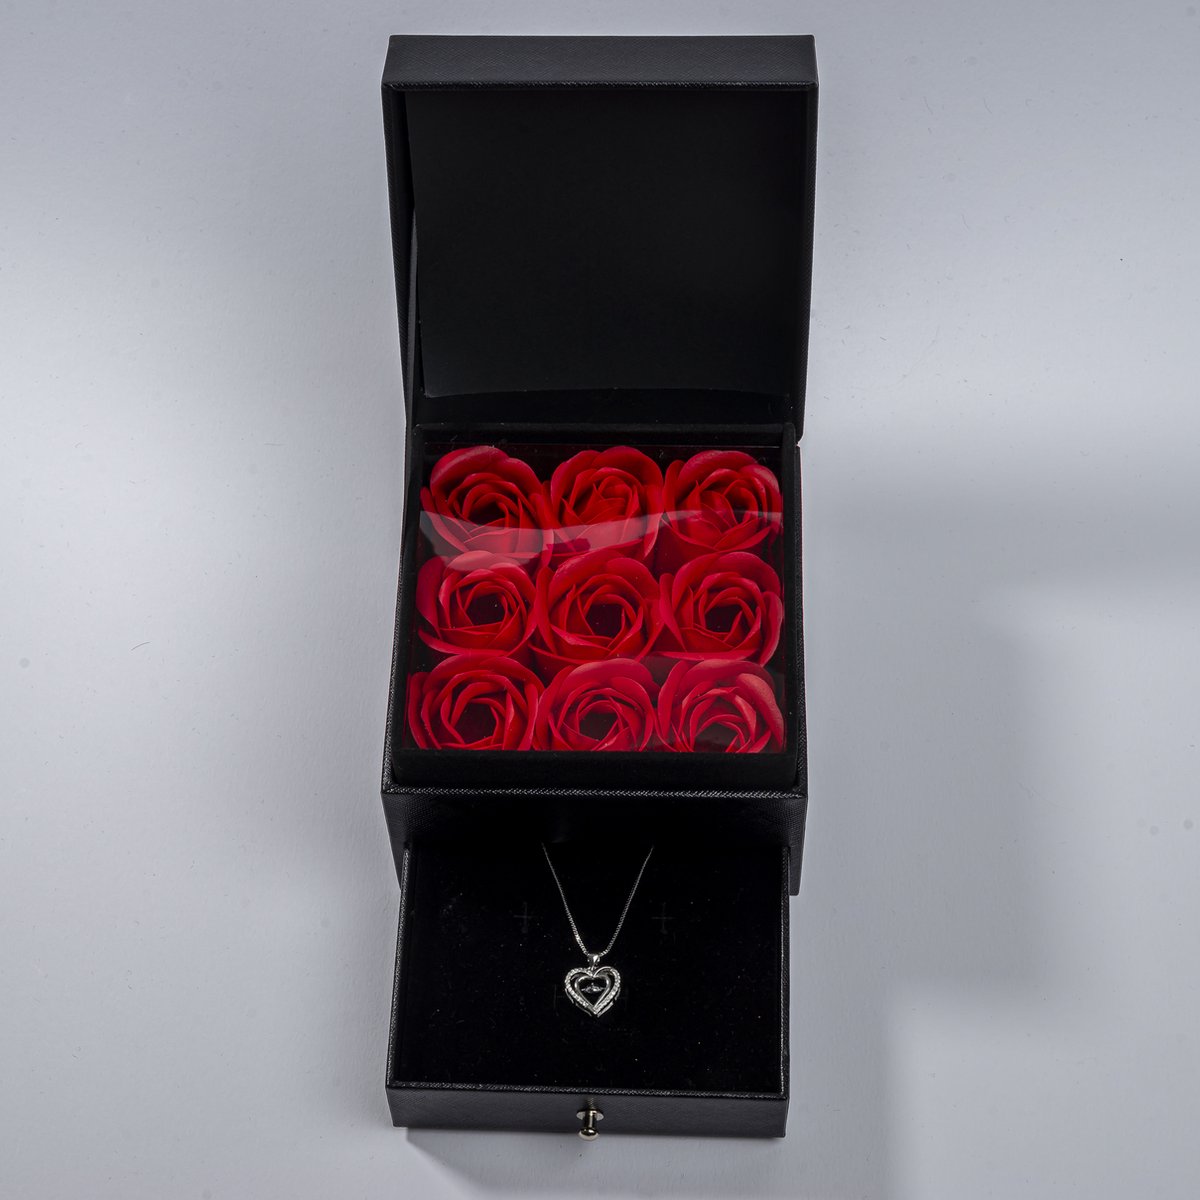 Swarovski Silverplated Hart Ketting - 43+5 cm - Giftbox vrouwen – Valentijn – Moederdag cadeau - Geschenkset vrouwen - Cadeau voor vrouw - Verjaardagscadeau - Valentijnsdag - Cadeautje - Geschenk - Verjaardag Cadeau vrouw - cadeau - kerst cadeau